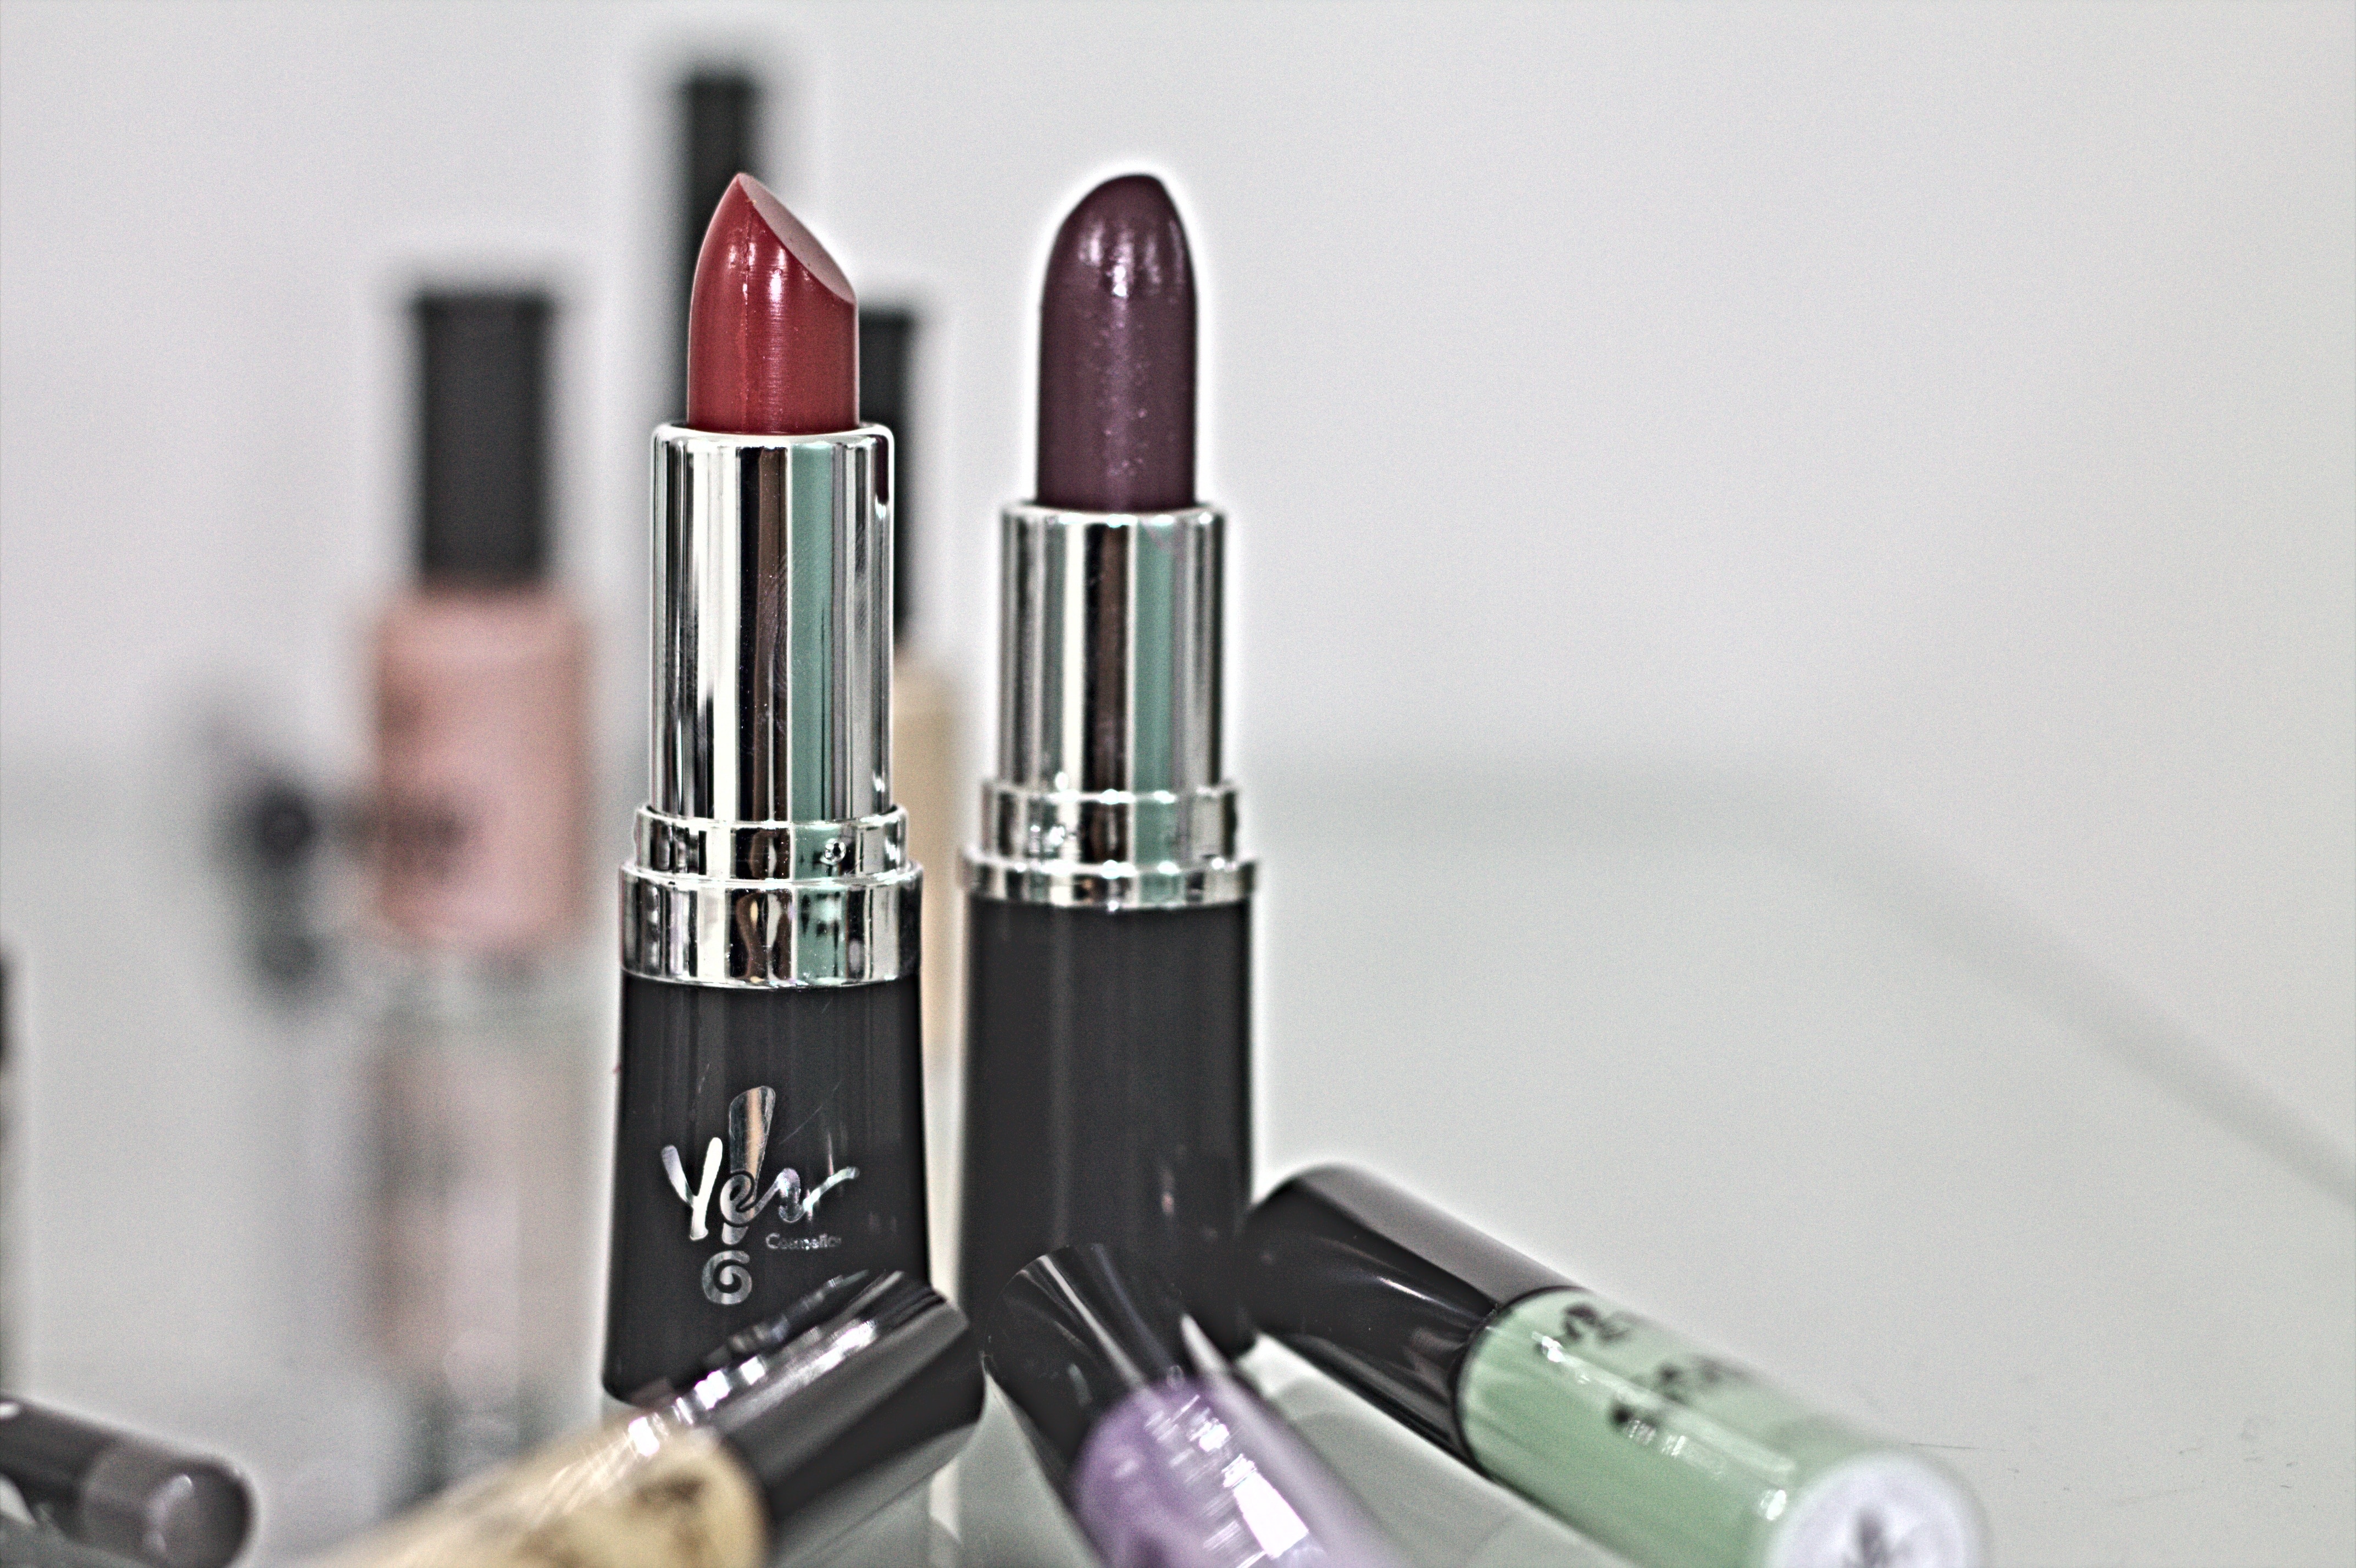 liquid and stick lipsticks shown